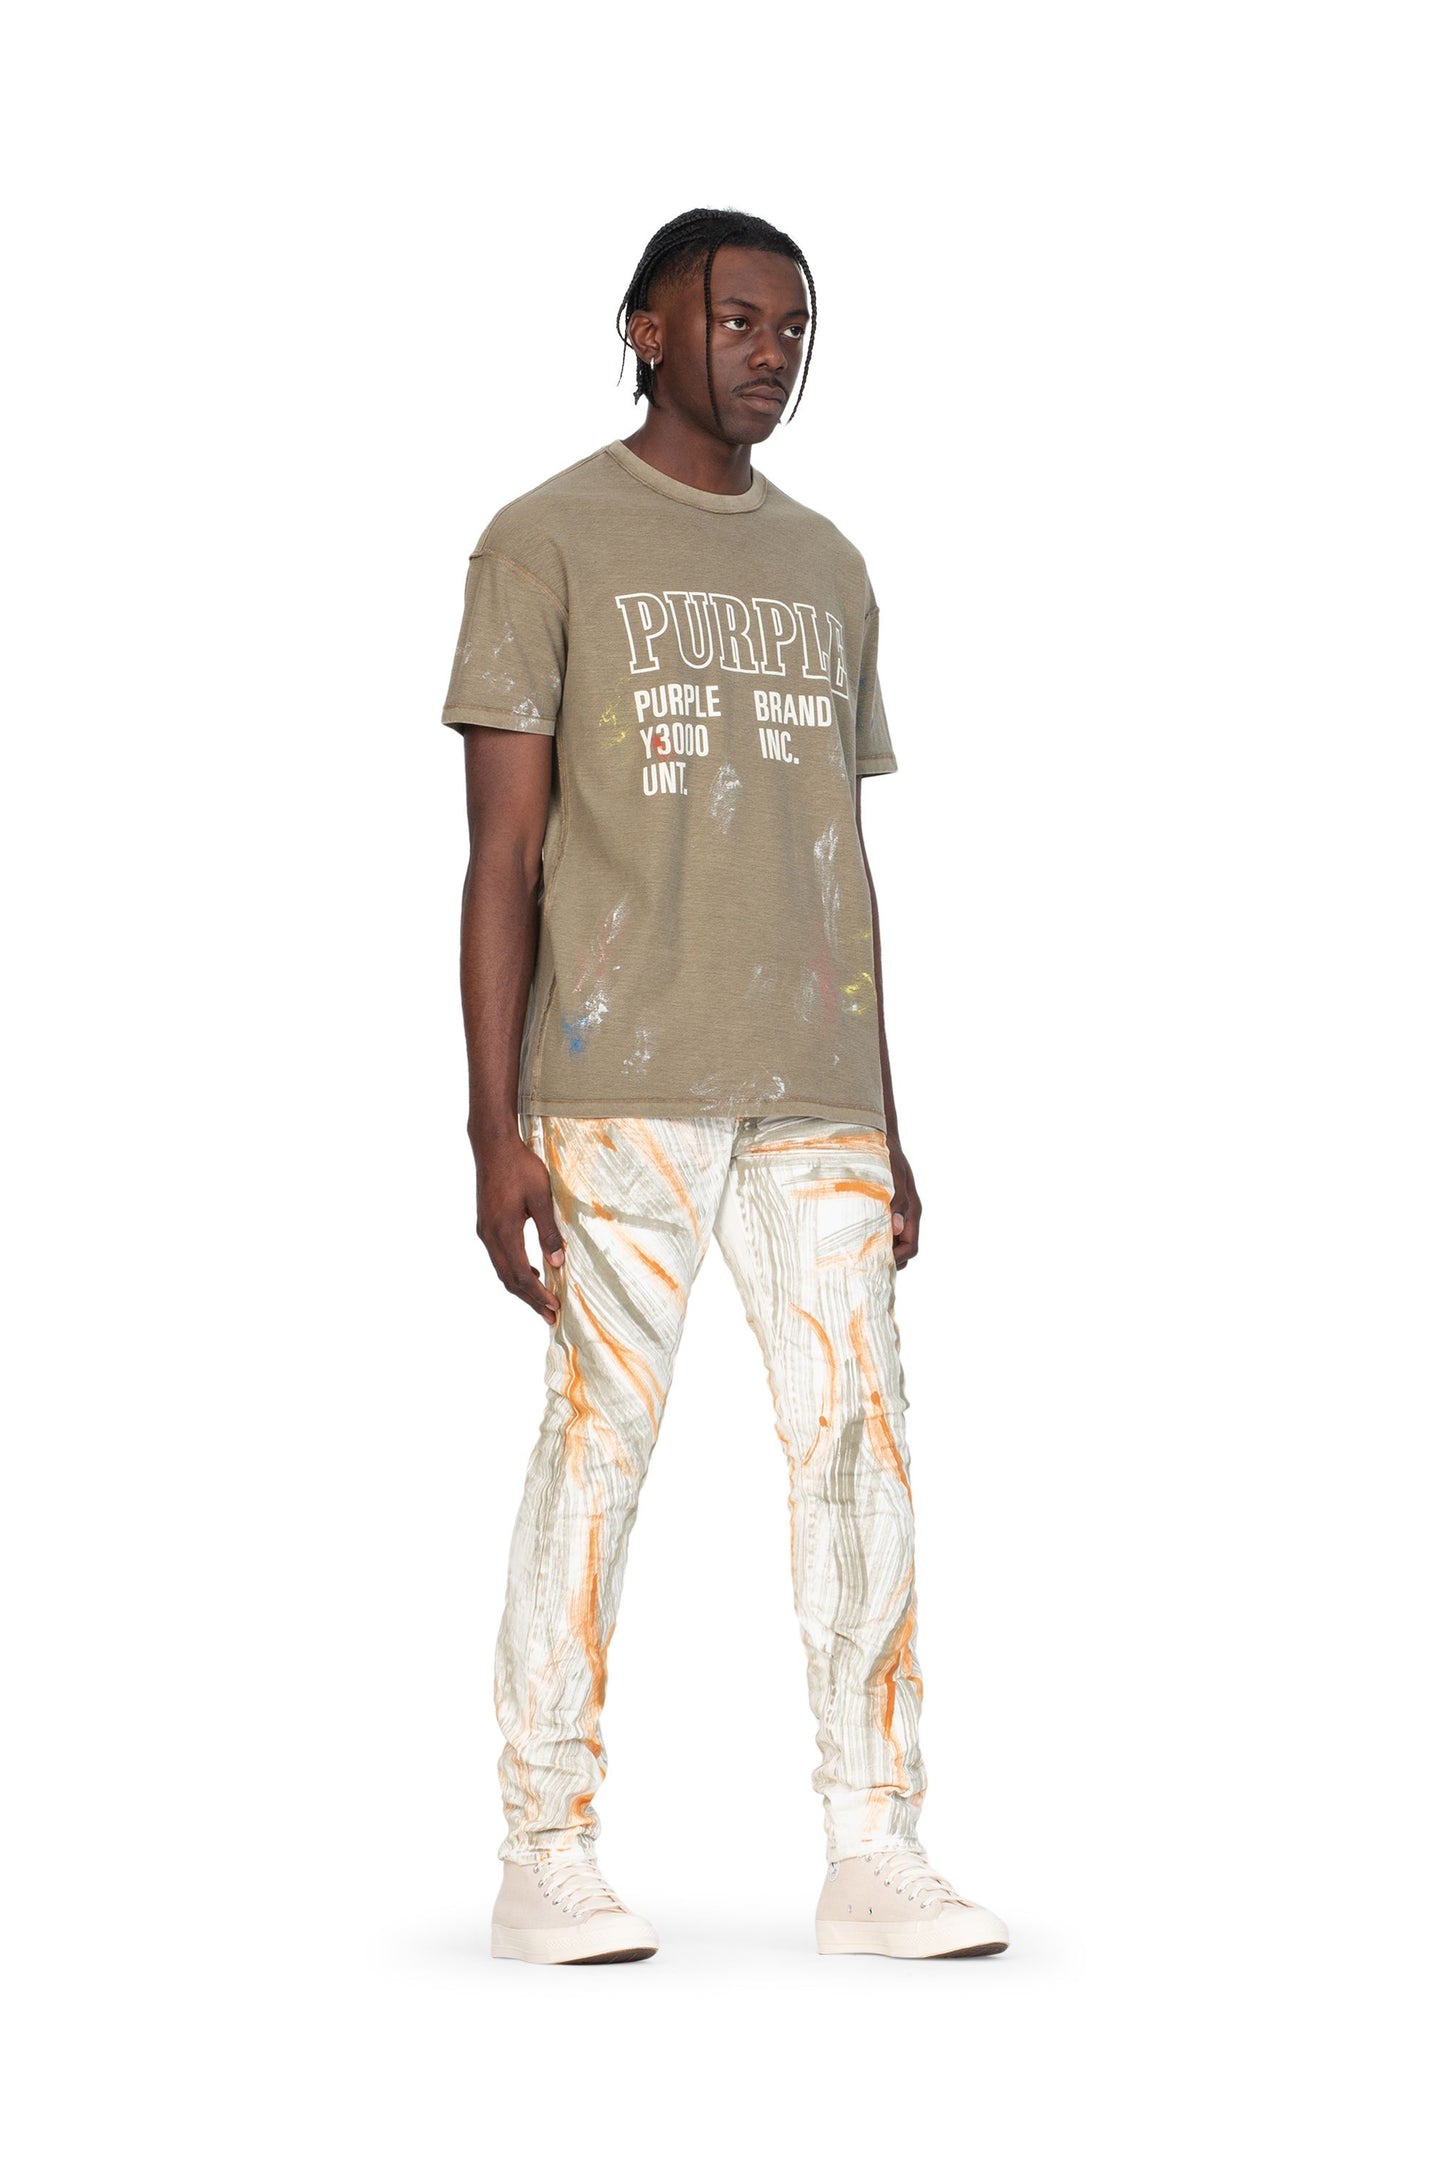 PURPLE BRAND - Men's Denim Jean - Low Rise Skinny - Style No. P001 - White Brush Stroke - Model Side Pose